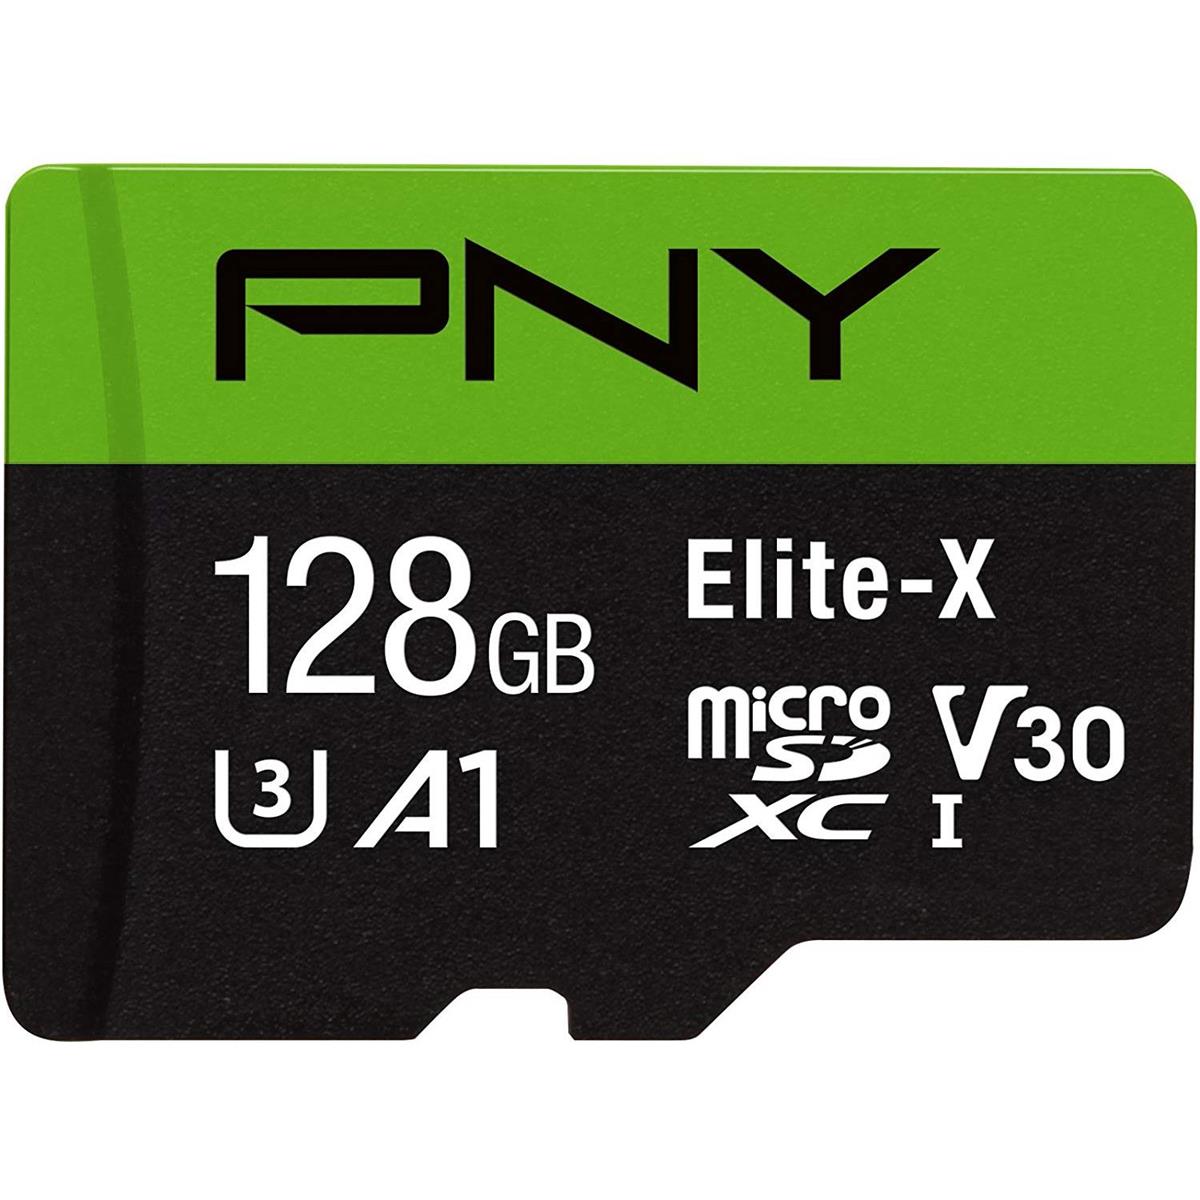 Image of PNY Technologies 128GB Elite-X microSDXC Class 10 UHS-I U3 microSDXC Card